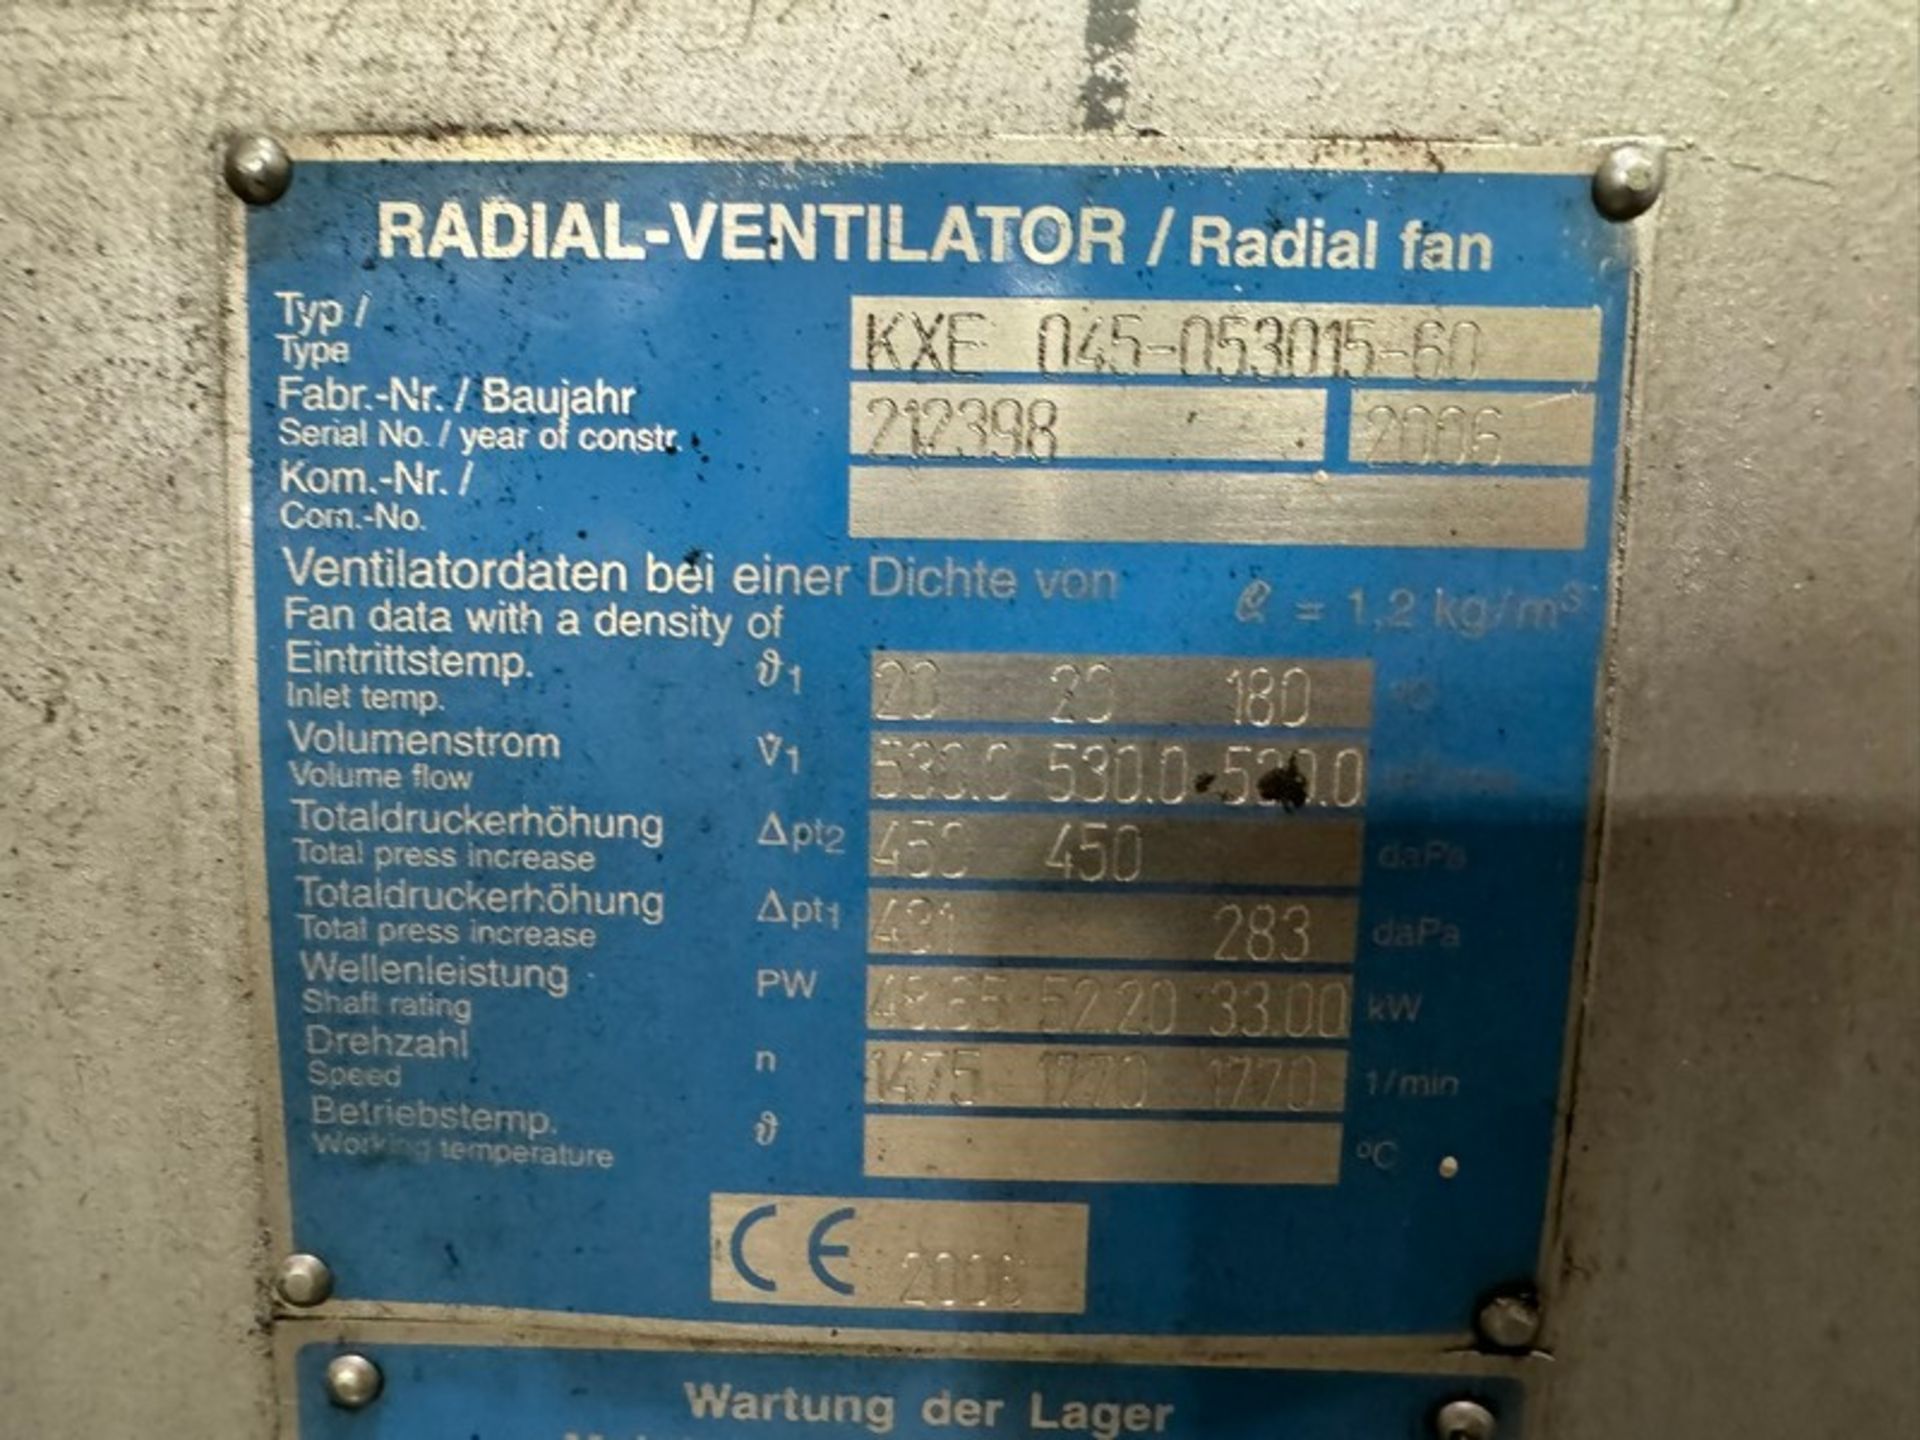 2006 Wartung der Öllager 55 kw Radial Hot Fan, Type: KXE 045-053015-60, S/N 212398, Includes - Image 5 of 9